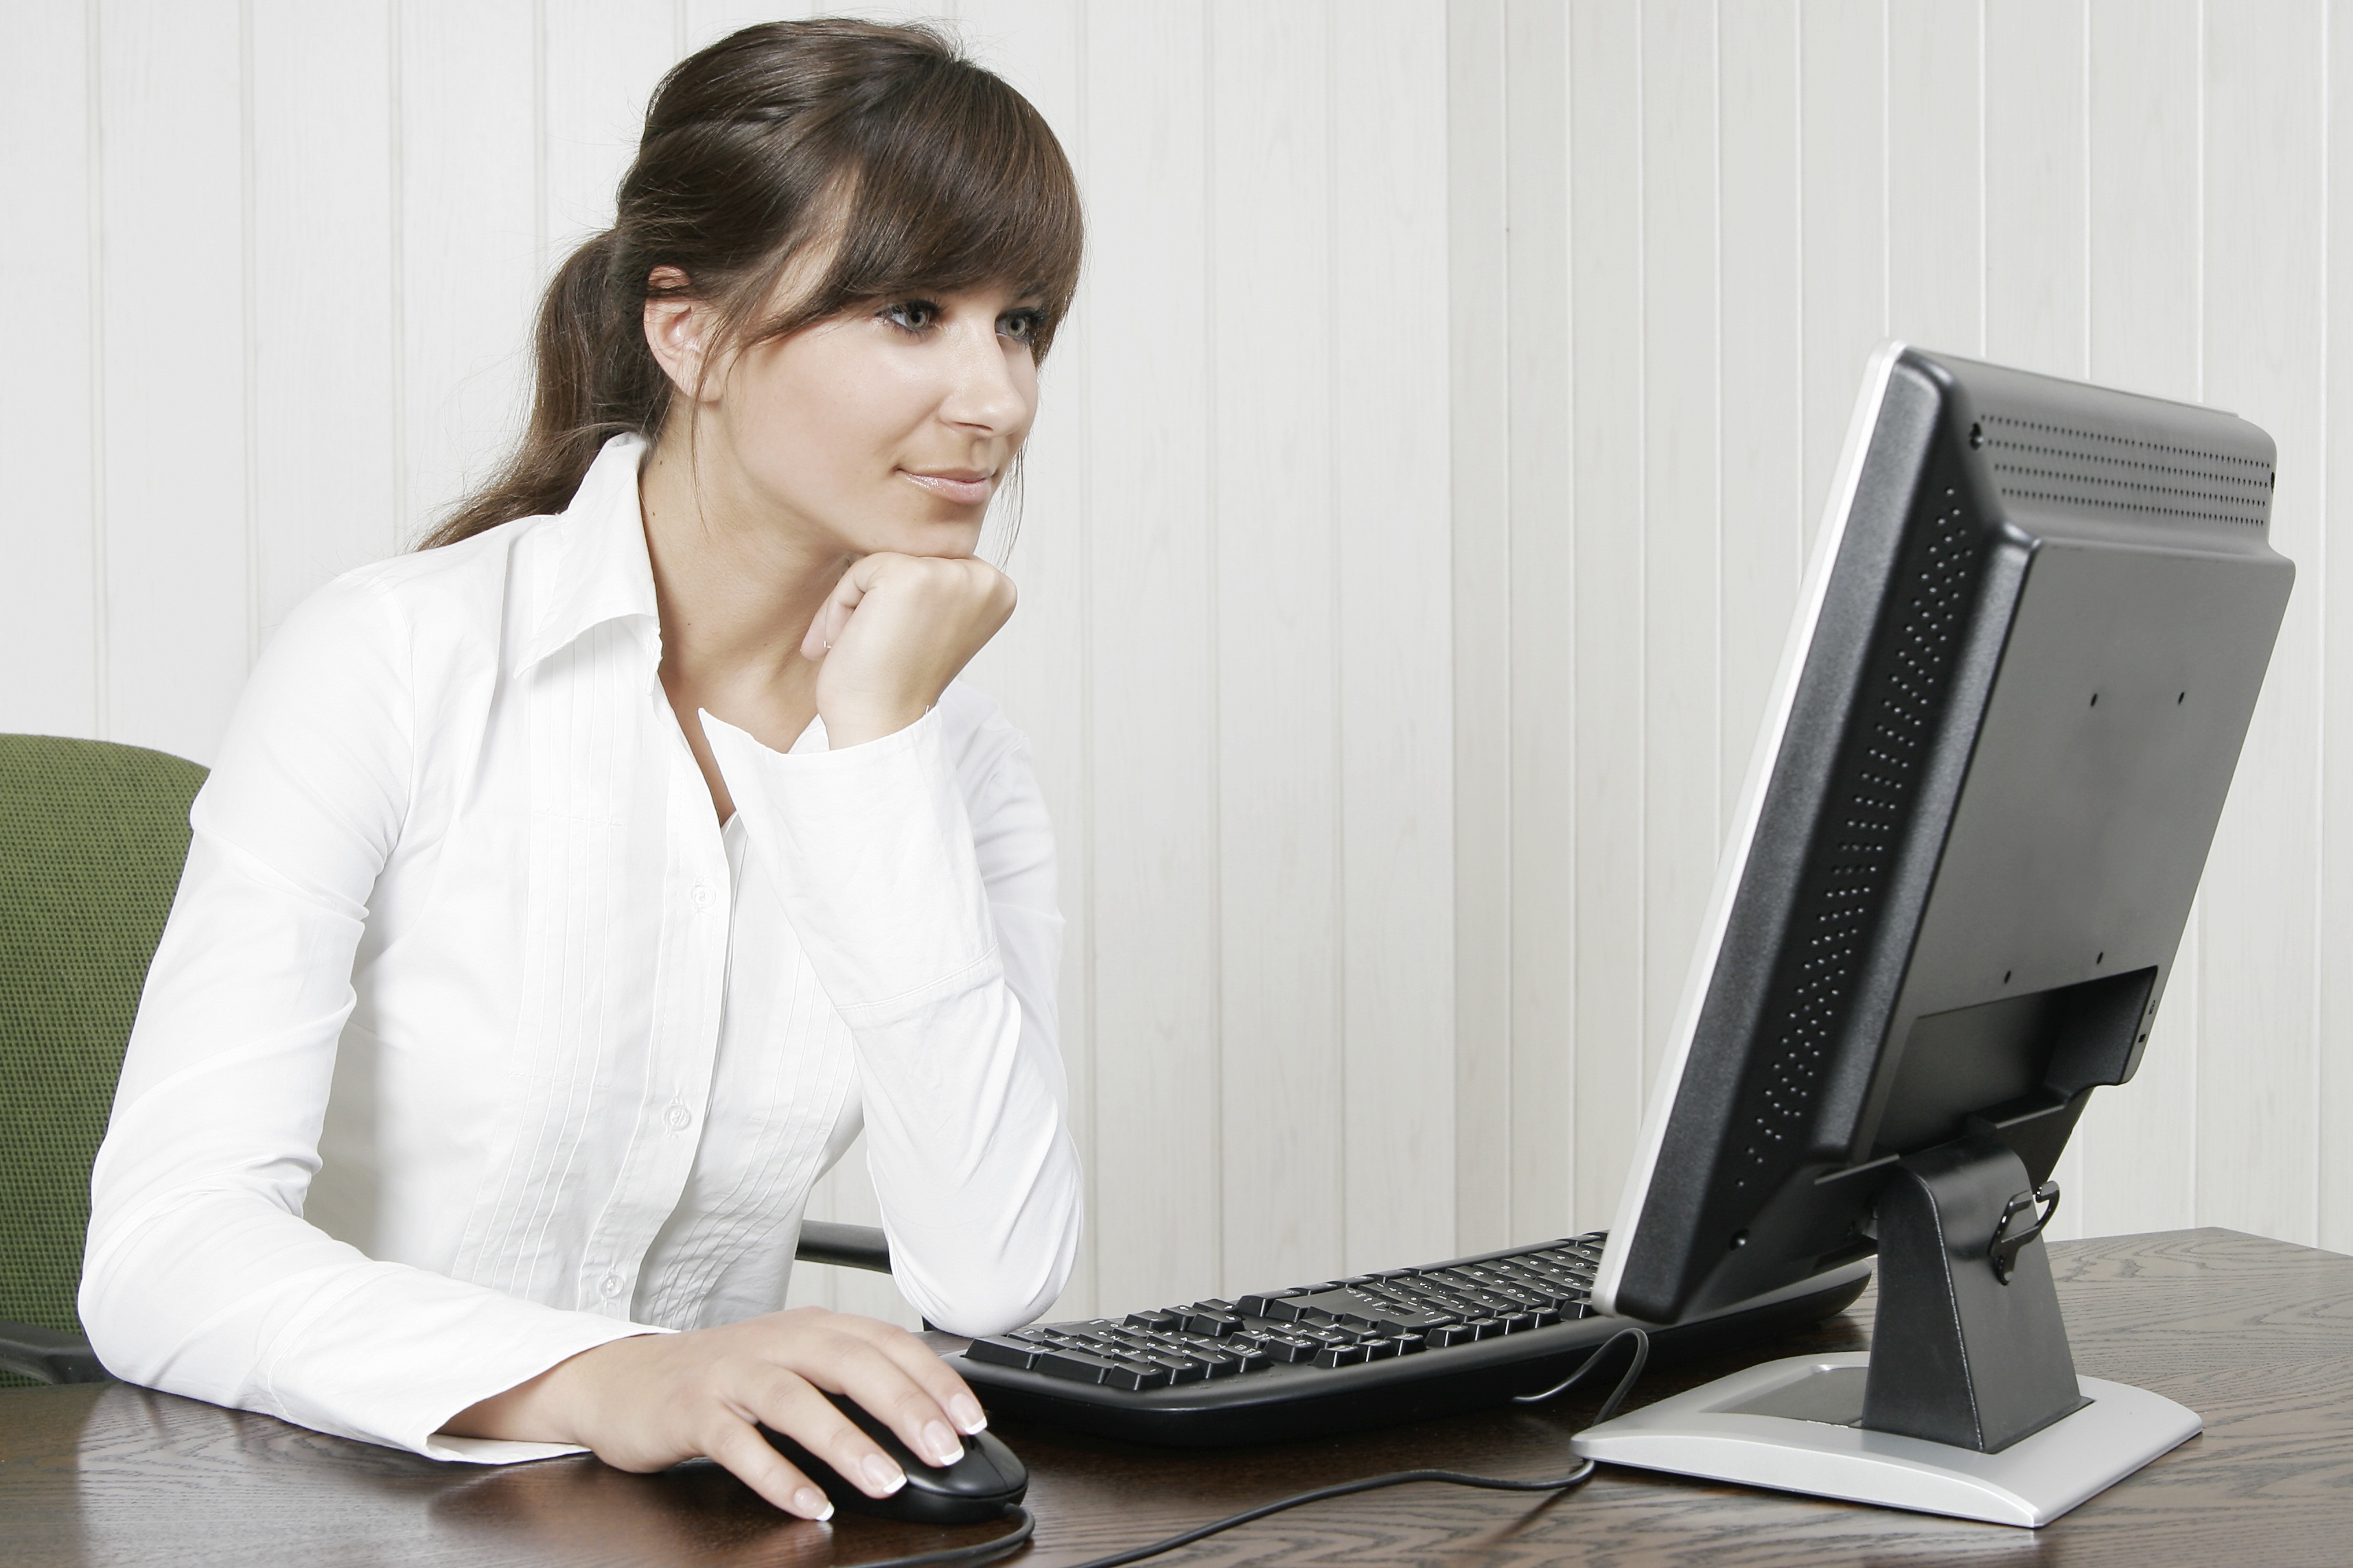 Организатор на компьютер. Женщина сидит за компьютером. Девушка сидит за компьютером. Компьютер в офисе. Женщина с компьютером.